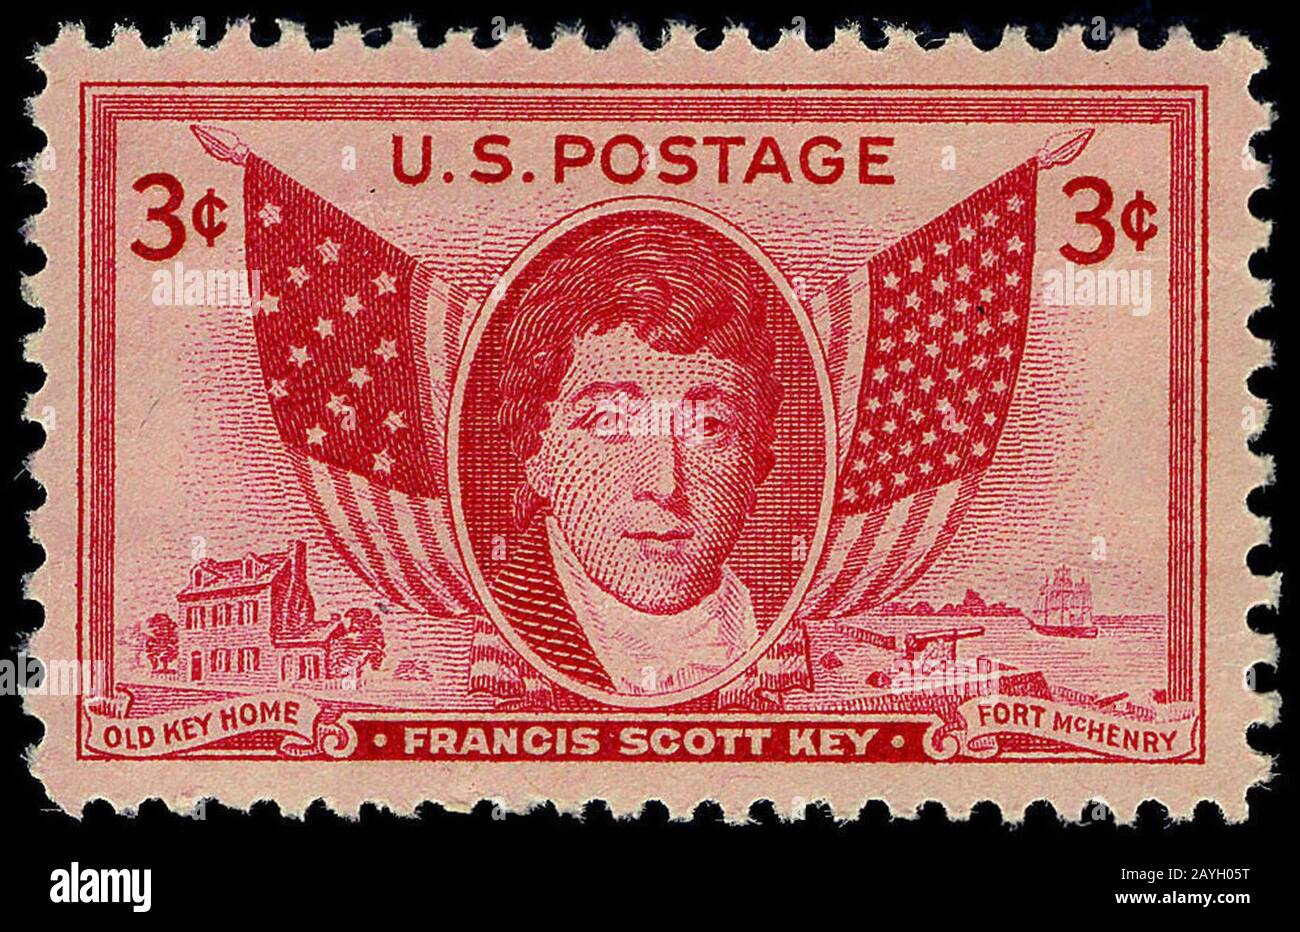 Francis Scott Key 3c 1948 emette il francobollo statunitense. Foto Stock